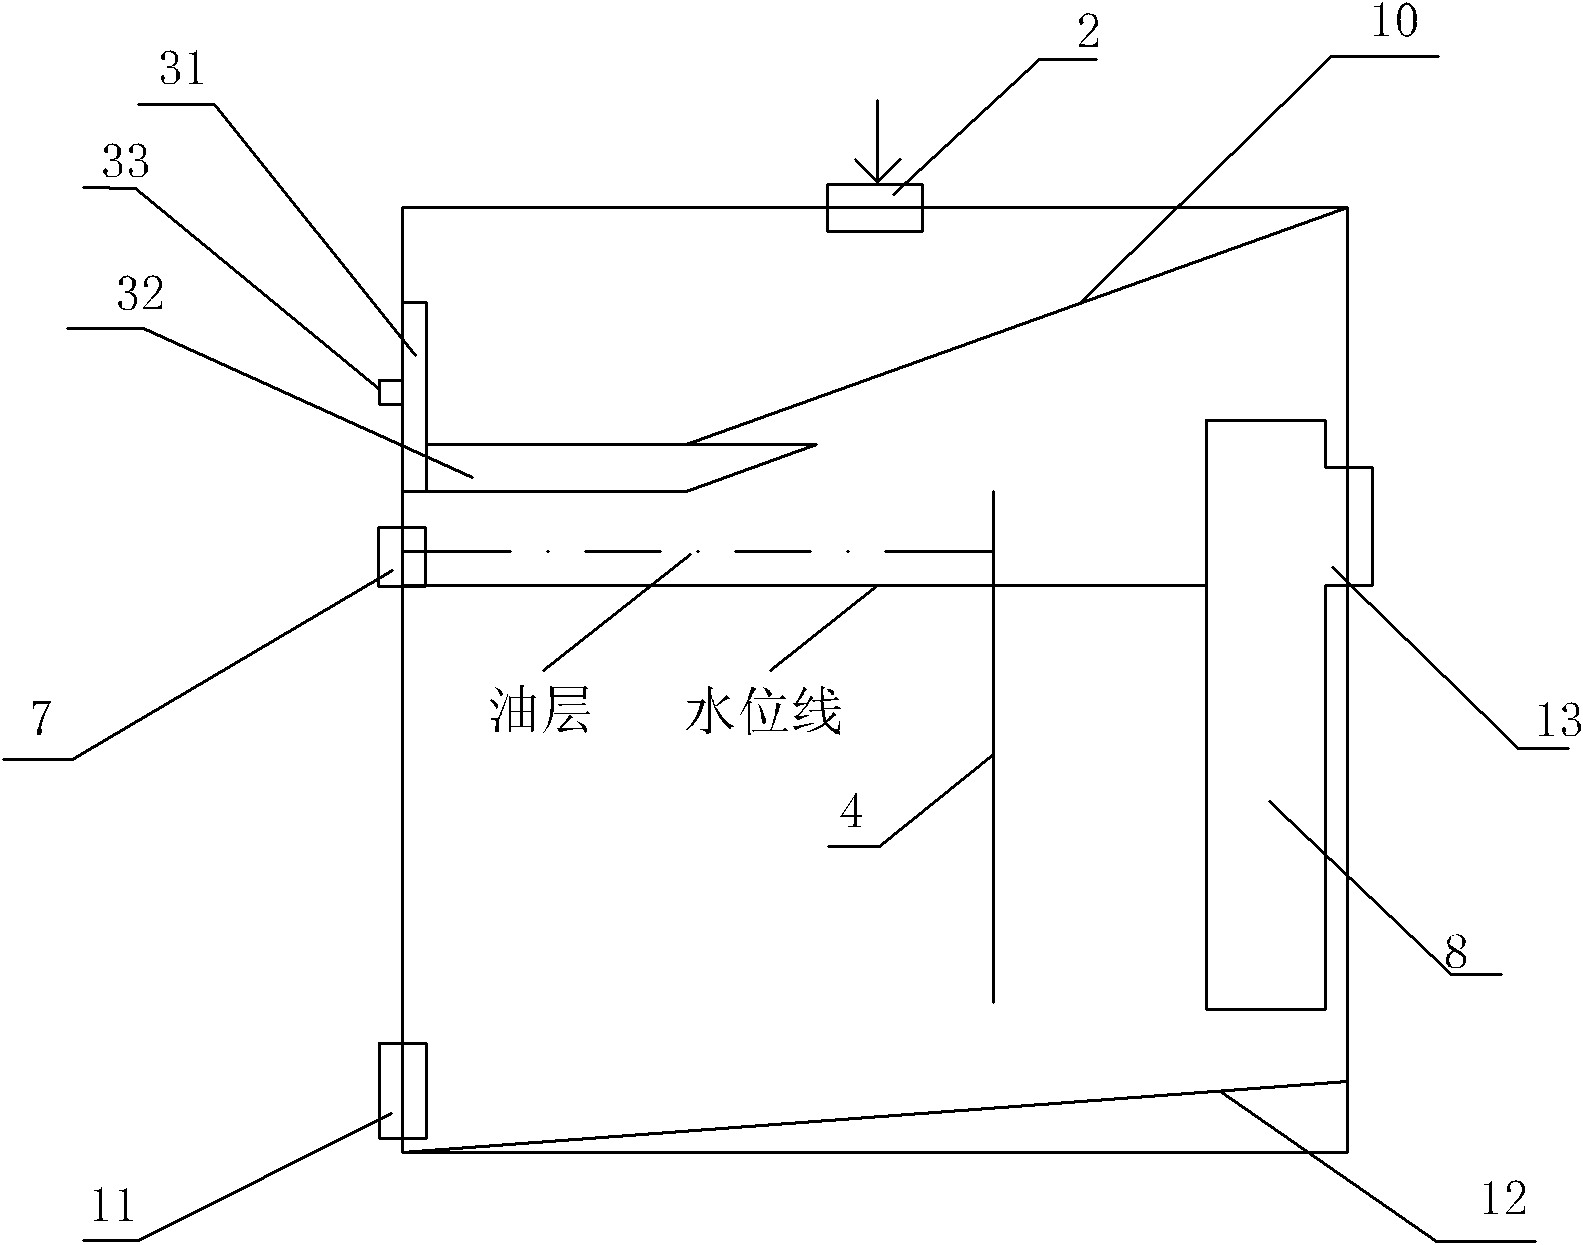 Oily sewage filtering device arranged below trough